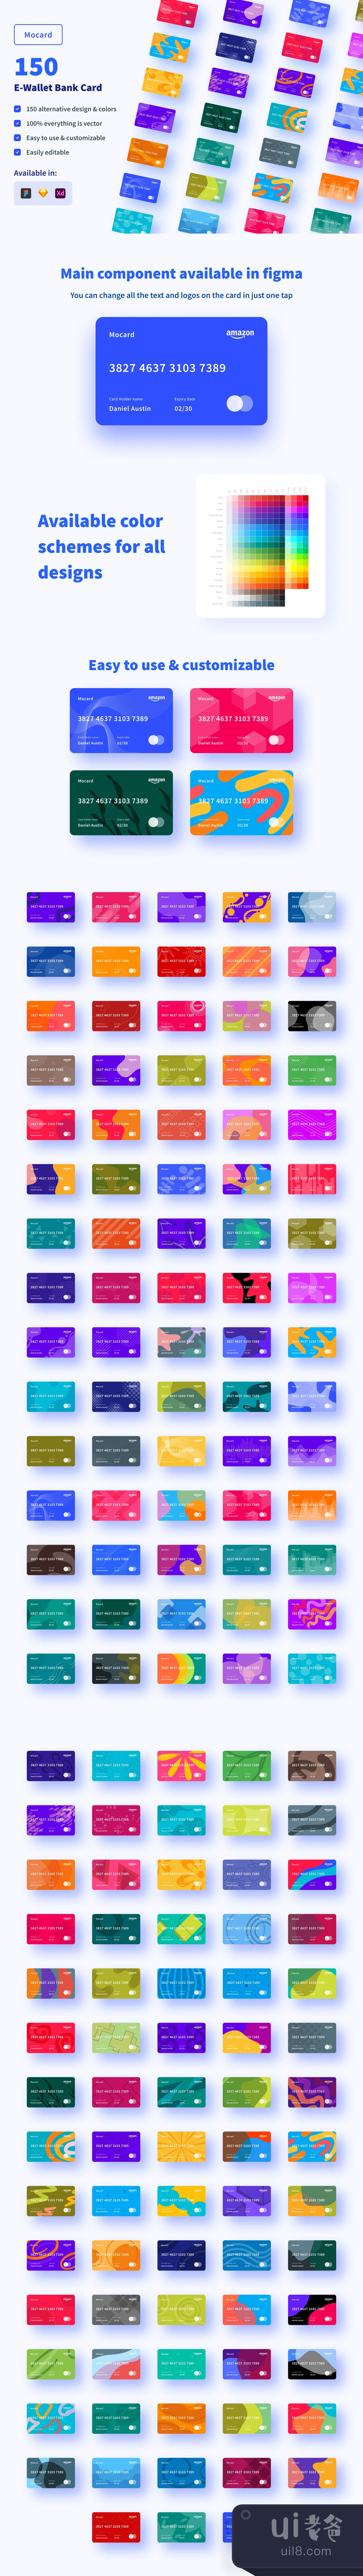 Mocard电子钱包银行卡 (Mocard E-Wallet Bank Card)插图